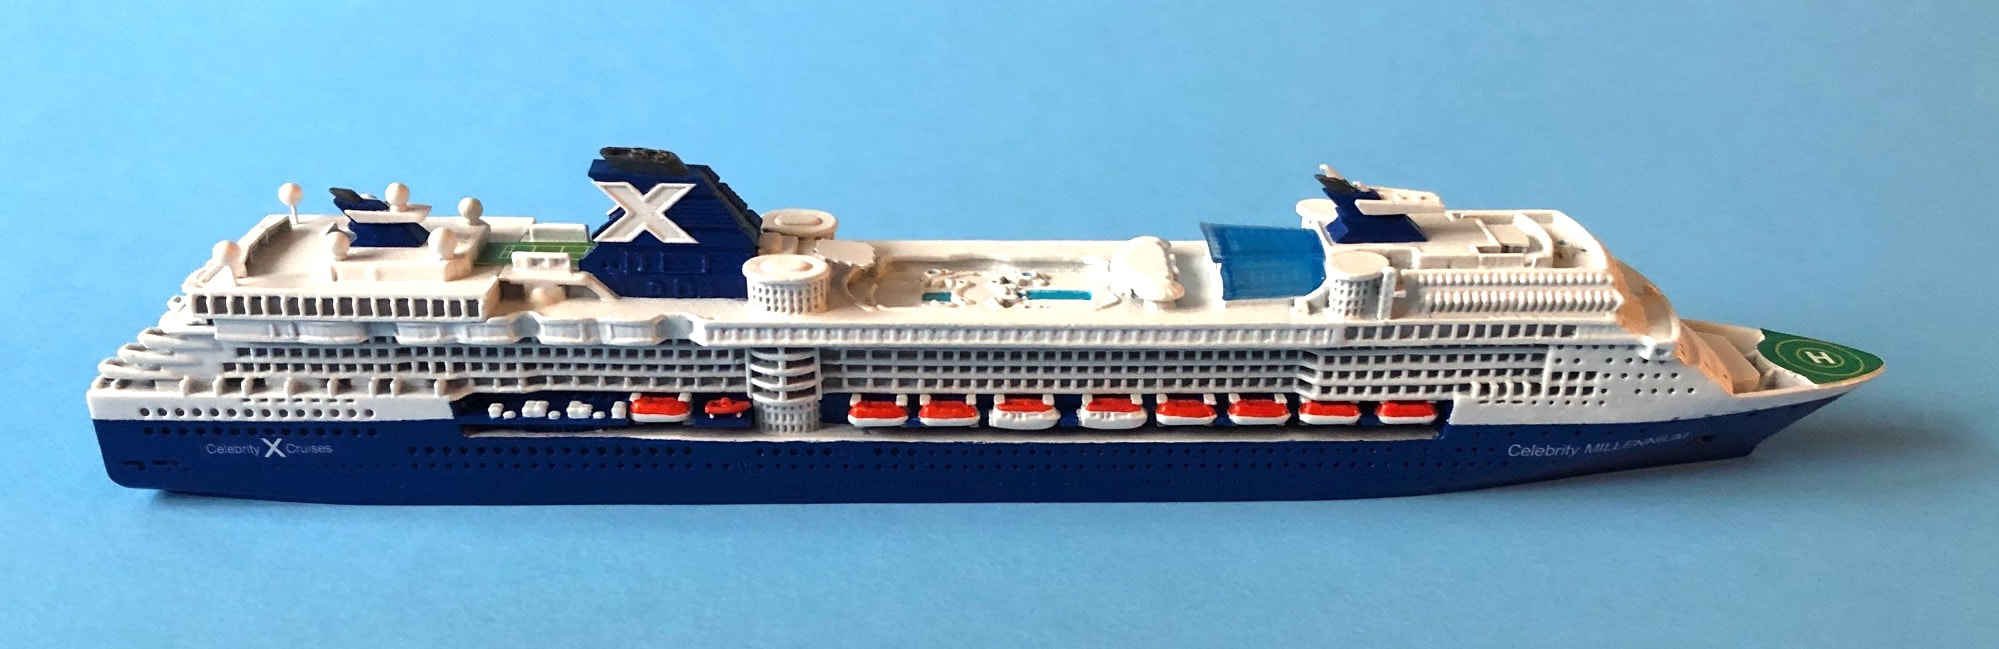 Celebrity Millennium cruise ship model Picture